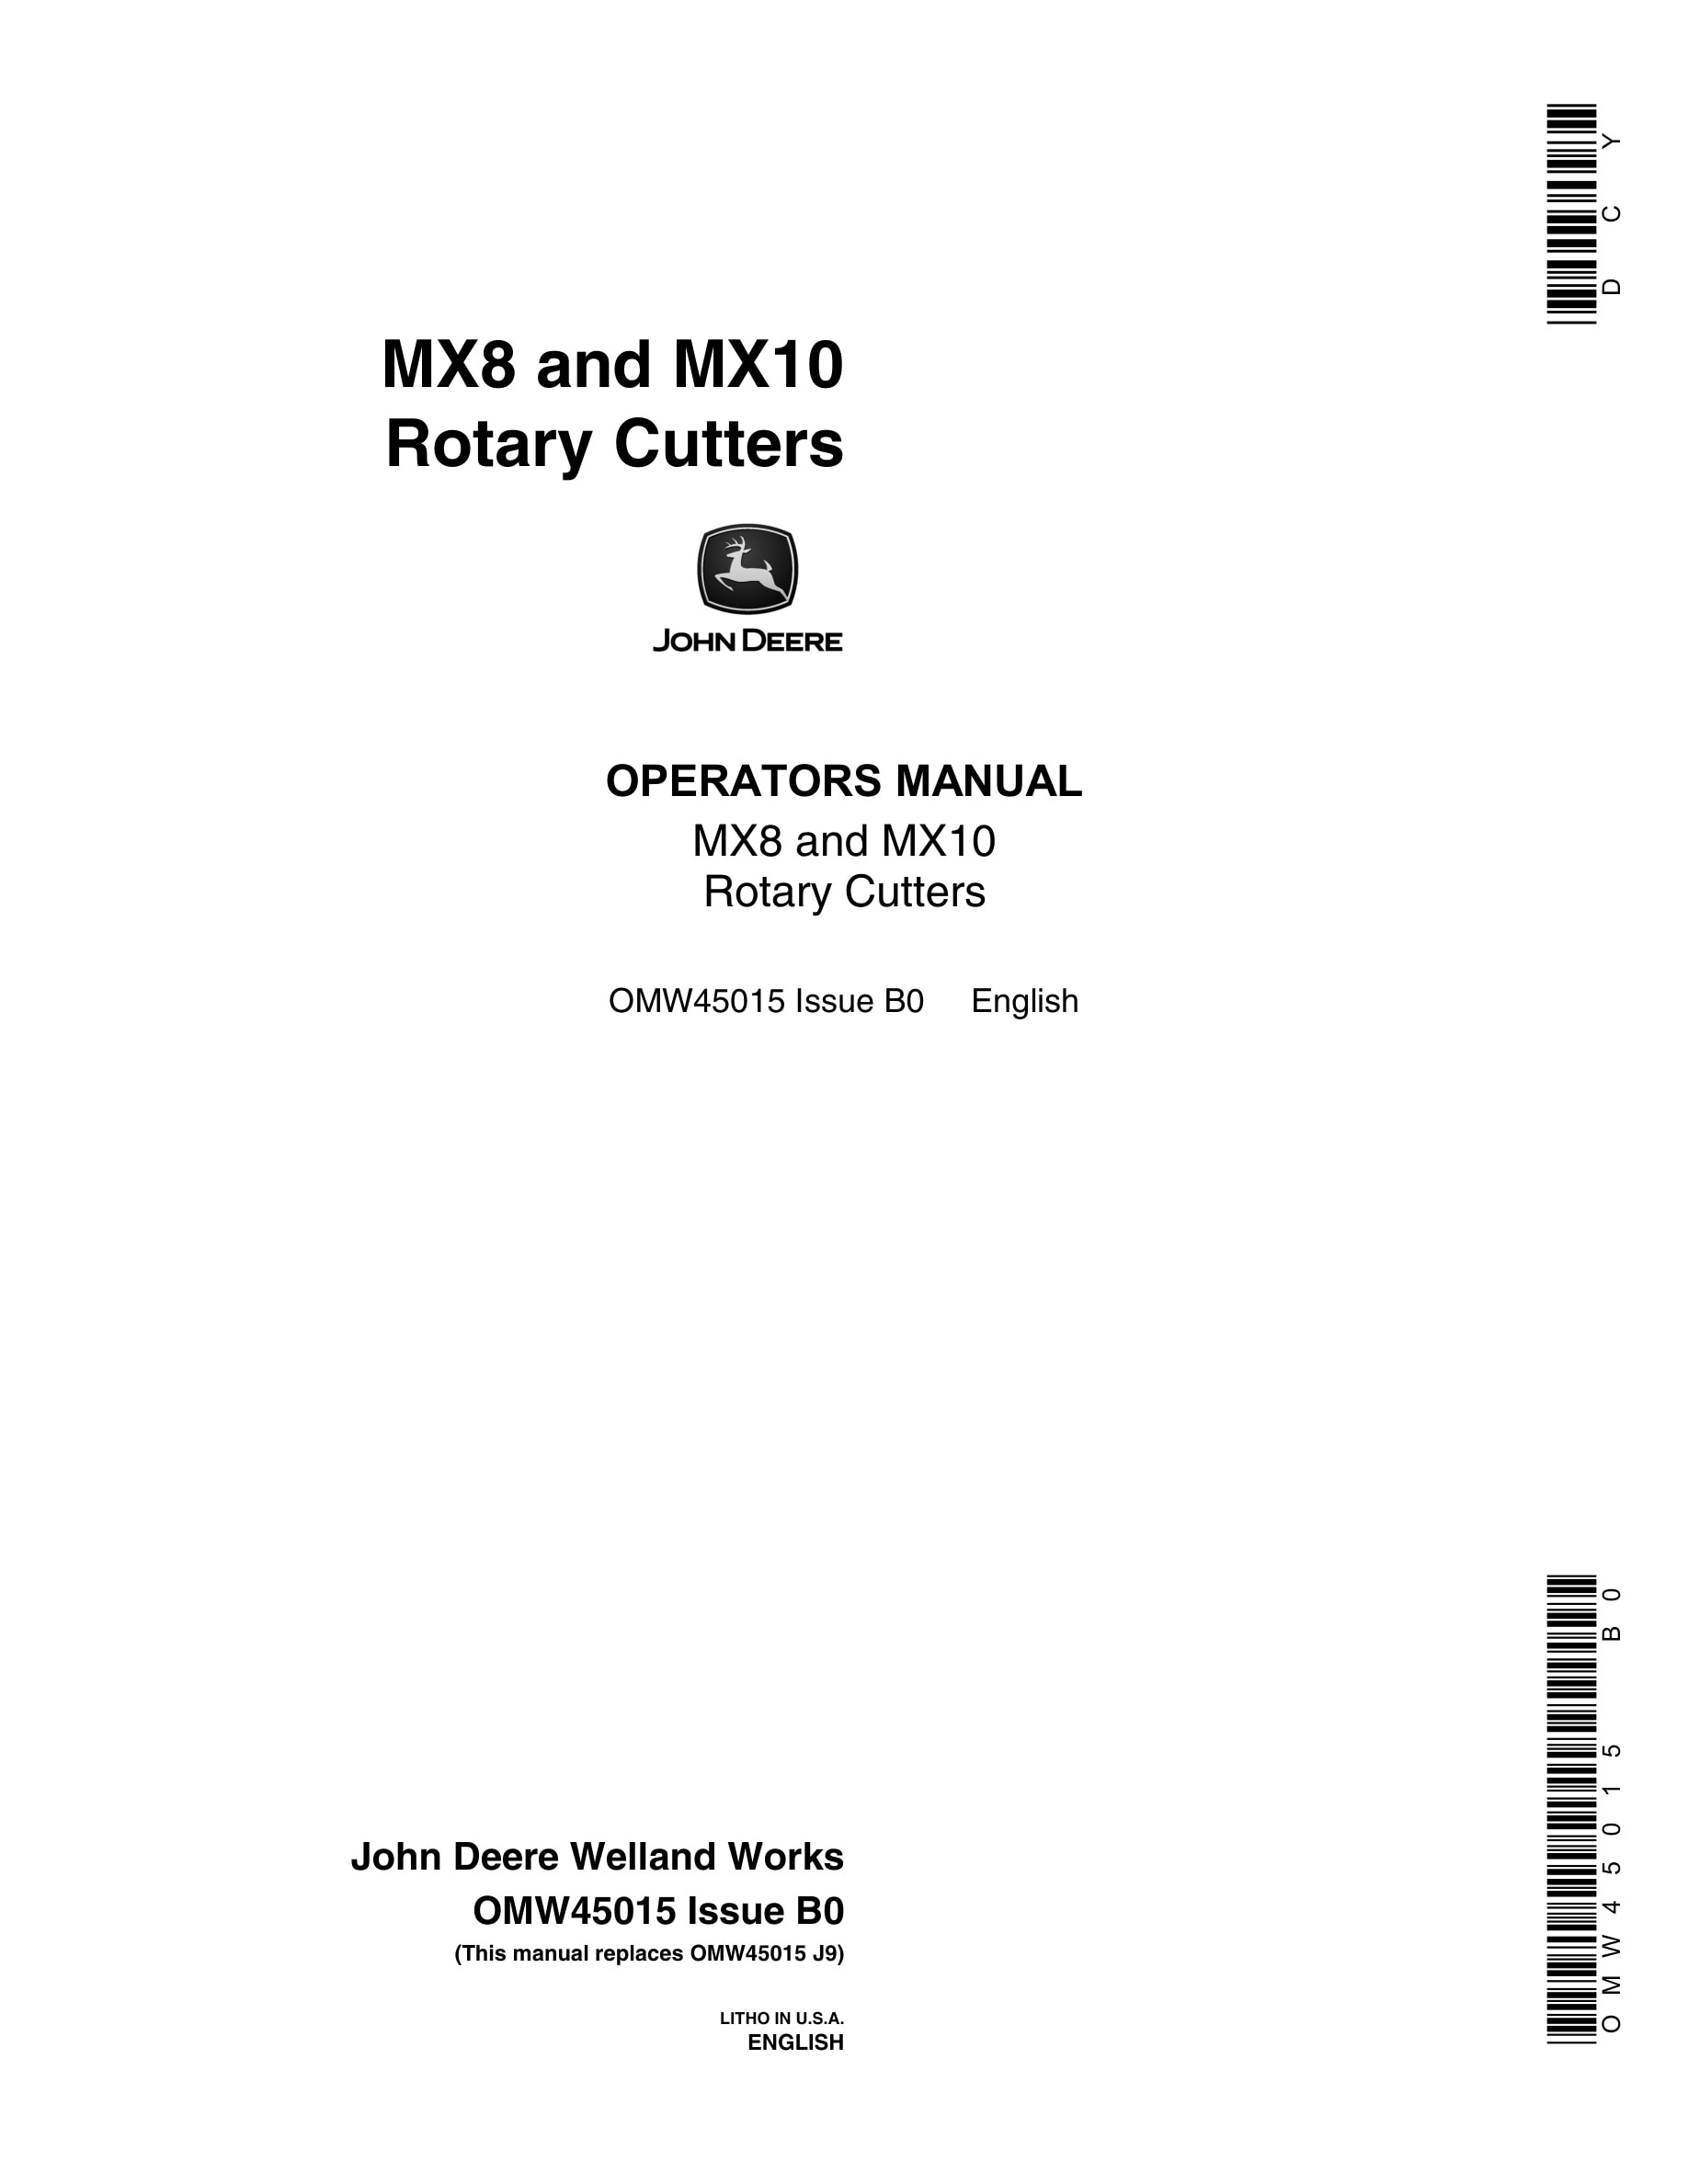 John Deere MX8 and MX10 Rotary Cutter Operator Manual OMW45015-1